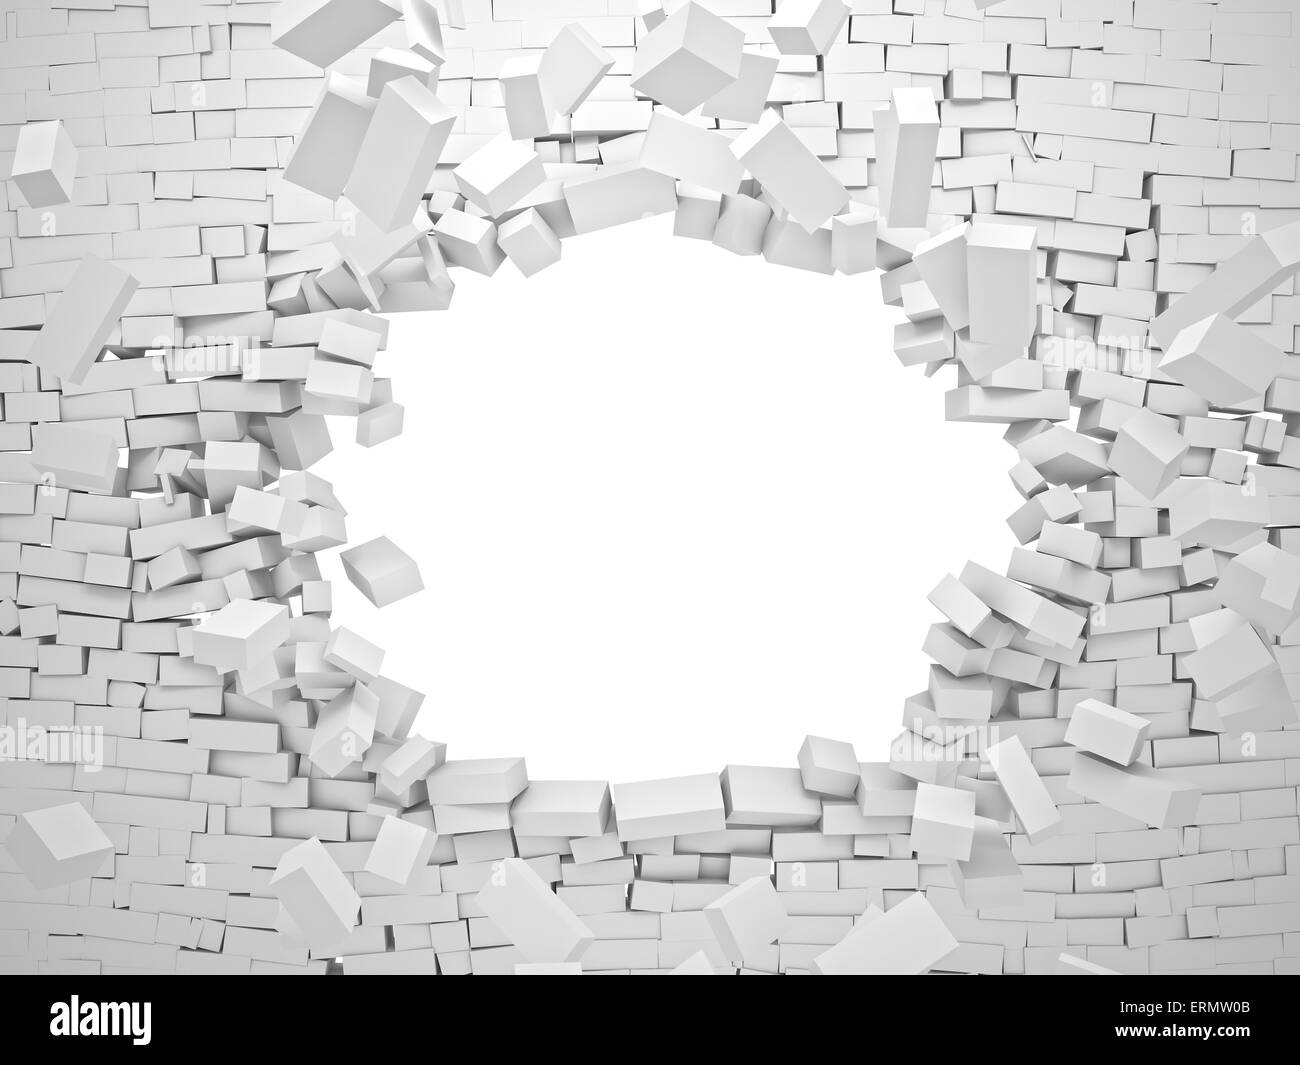 breaking wall brick 3d image Stock Photo